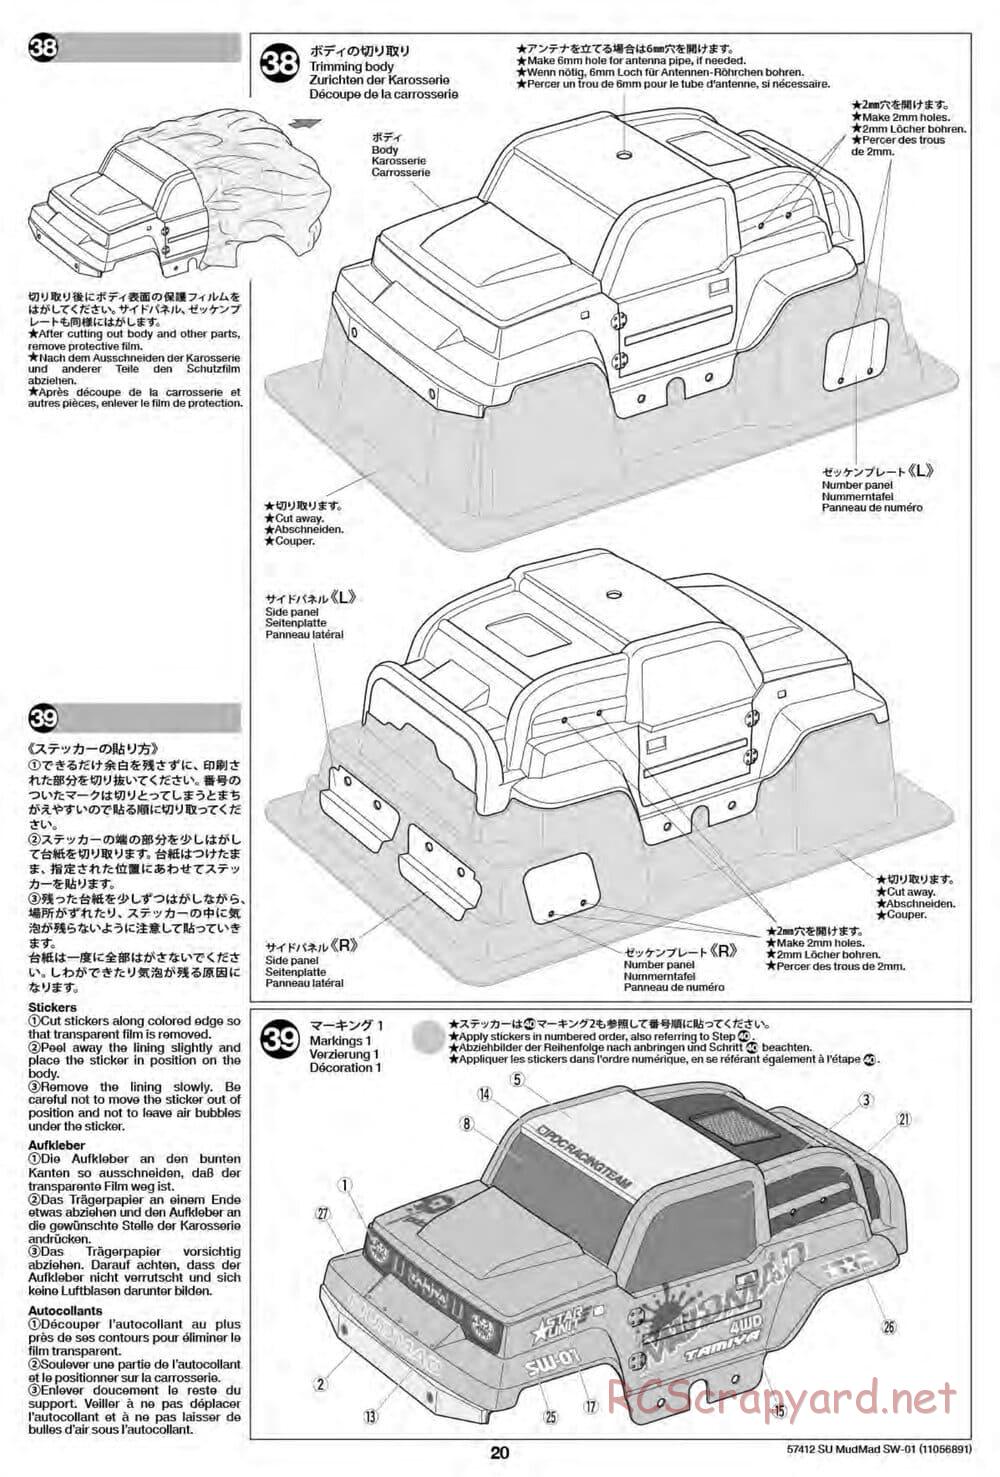 Tamiya - MudMad - SW-01 Chassis - Manual - Page 20